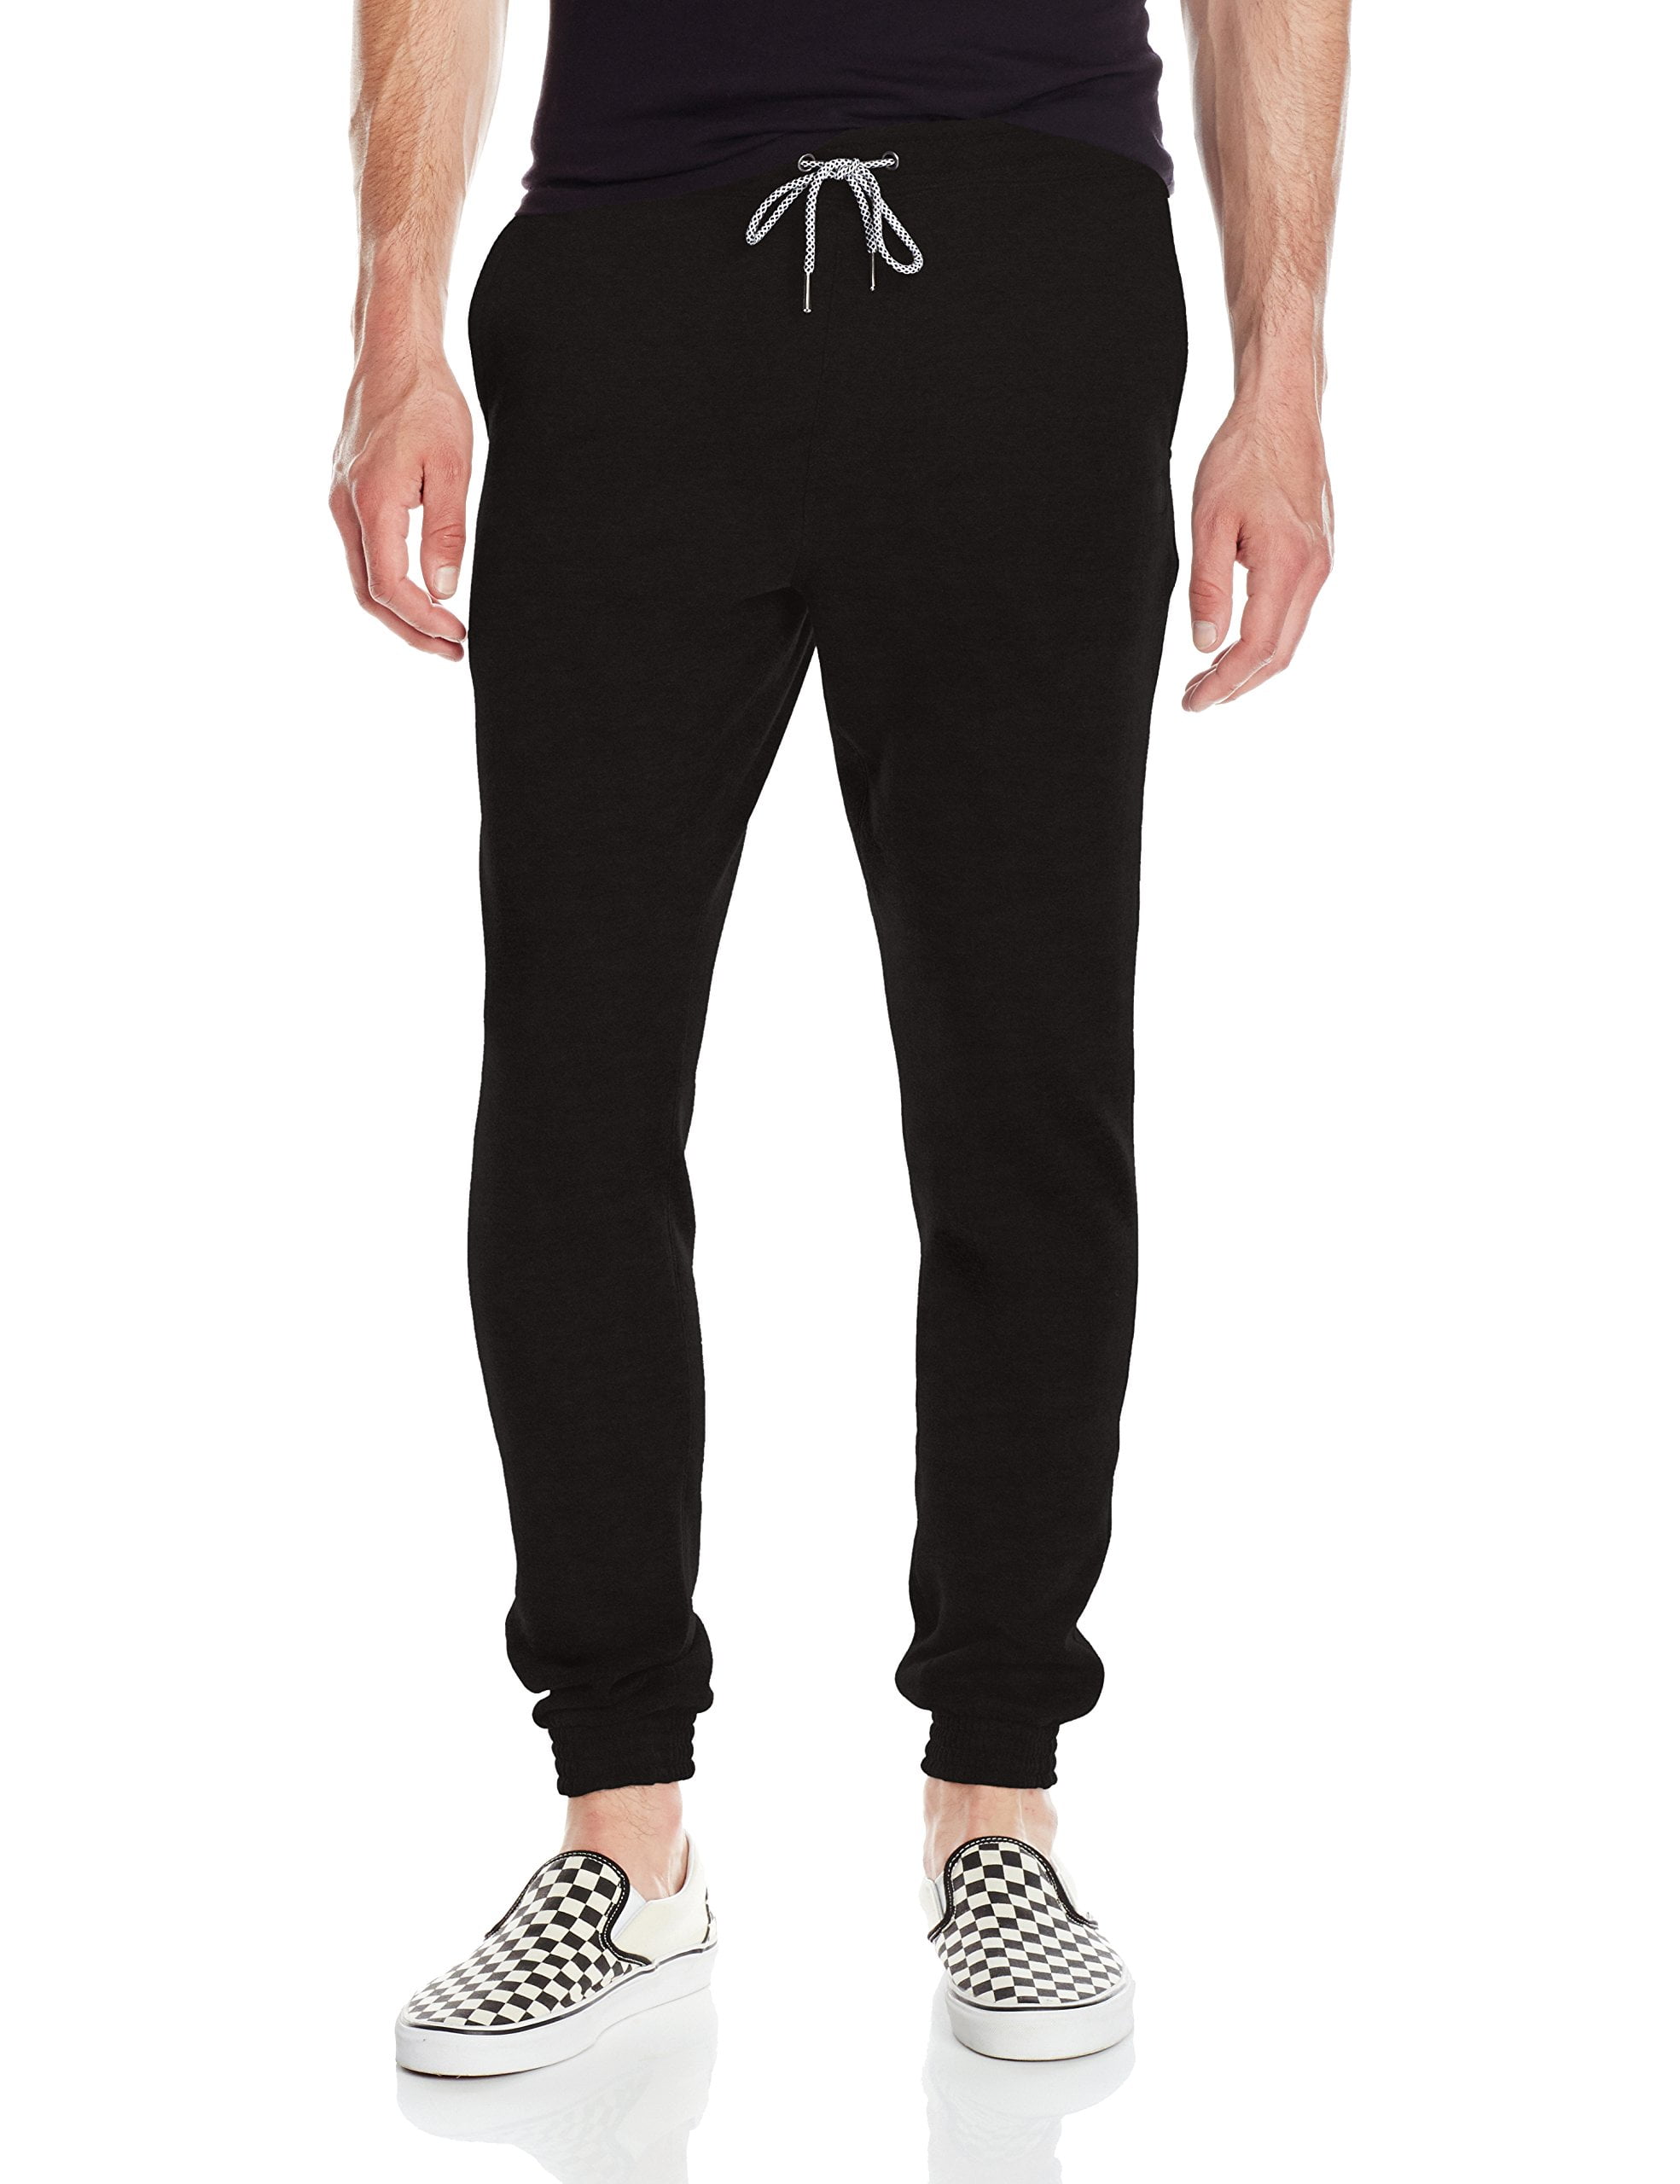 Volcom - Solid Men's Pull On Jogging Drawstring Pants XL - Walmart.com ...